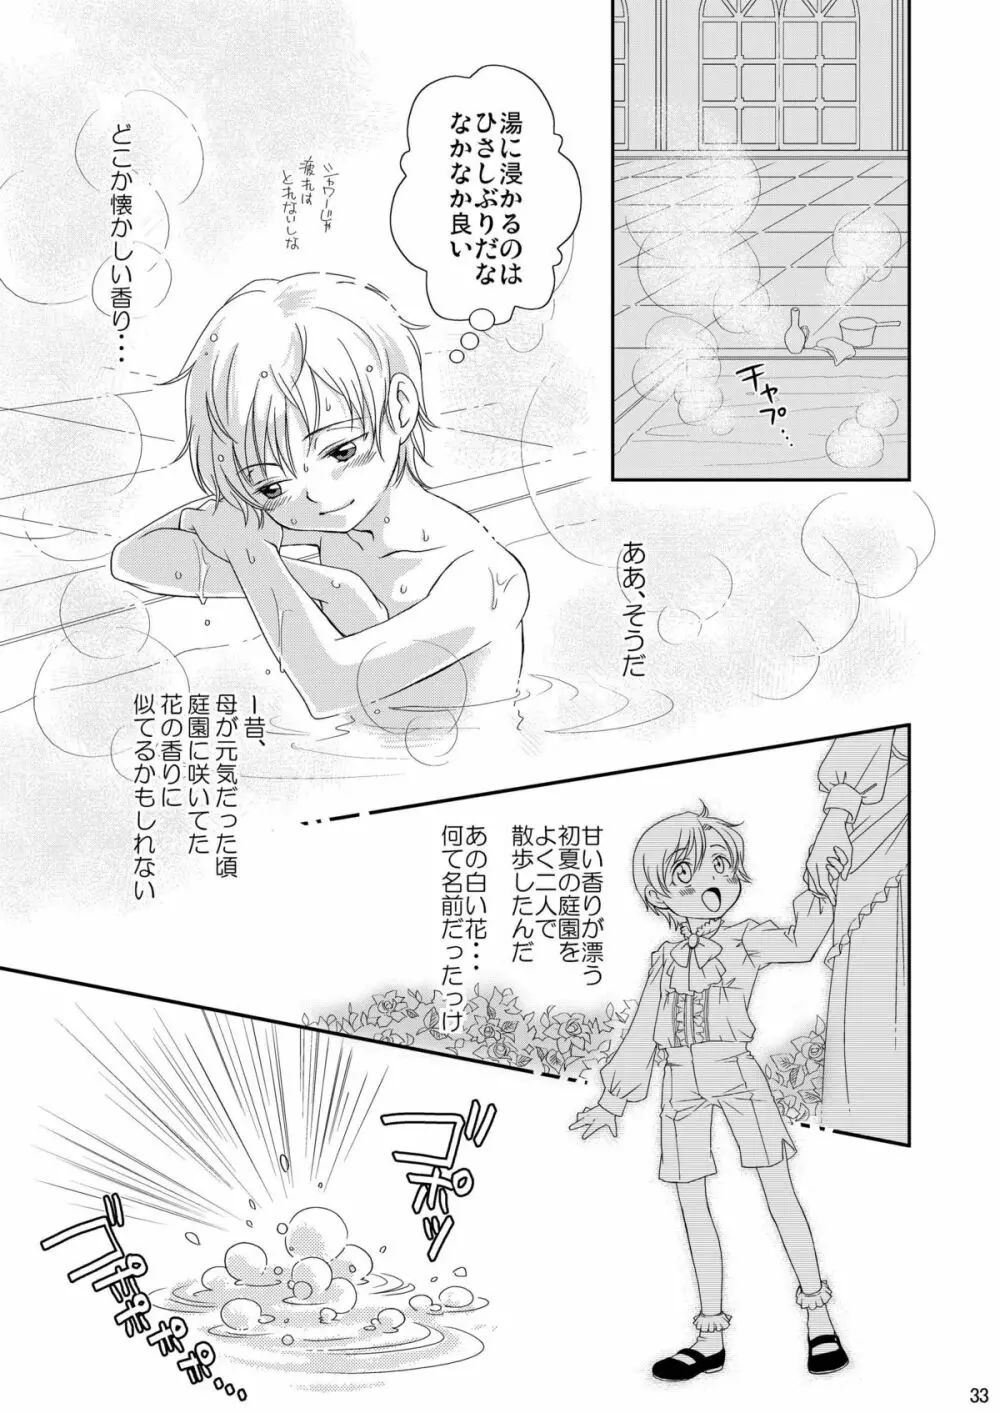 Re: ぷれい2 - page33